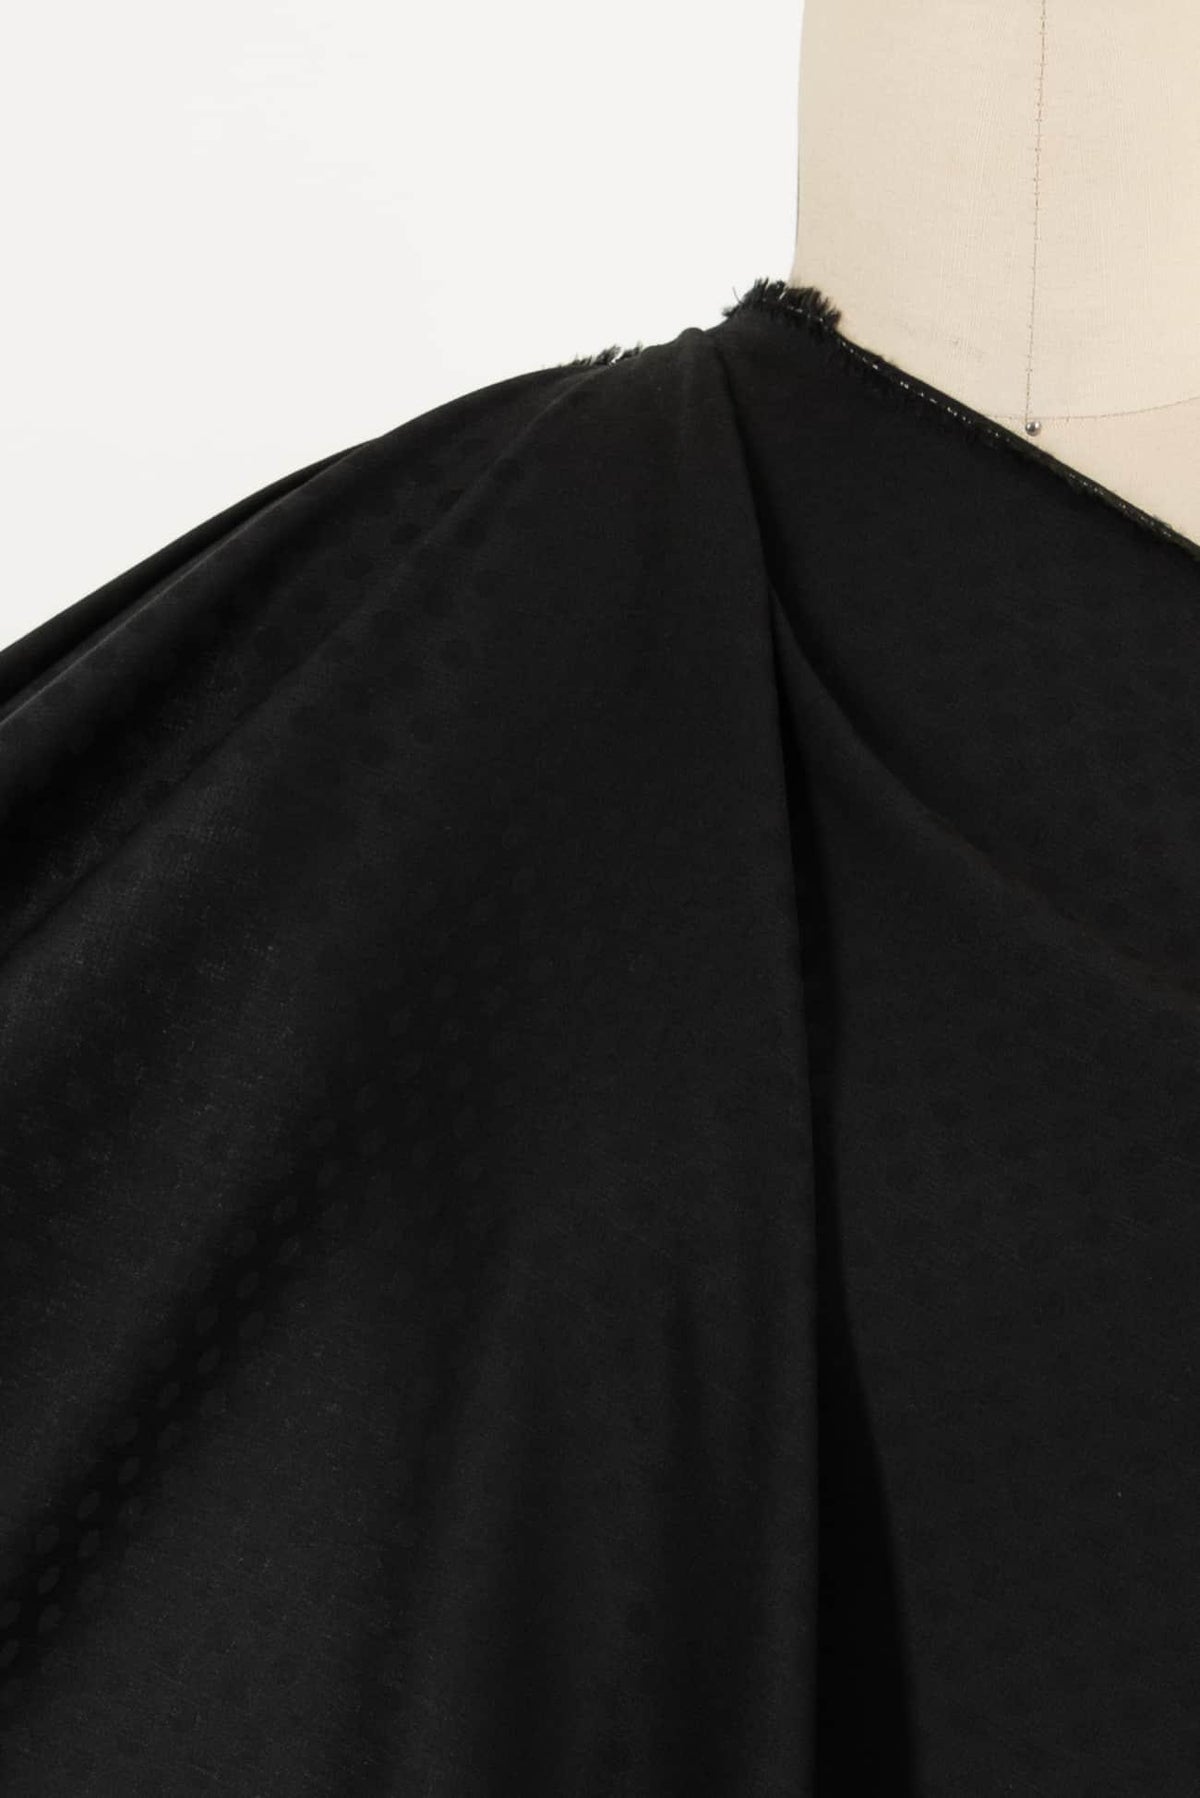 Eclipse Dots Japanese Cotton Jacquard Woven - Marcy Tilton Fabrics